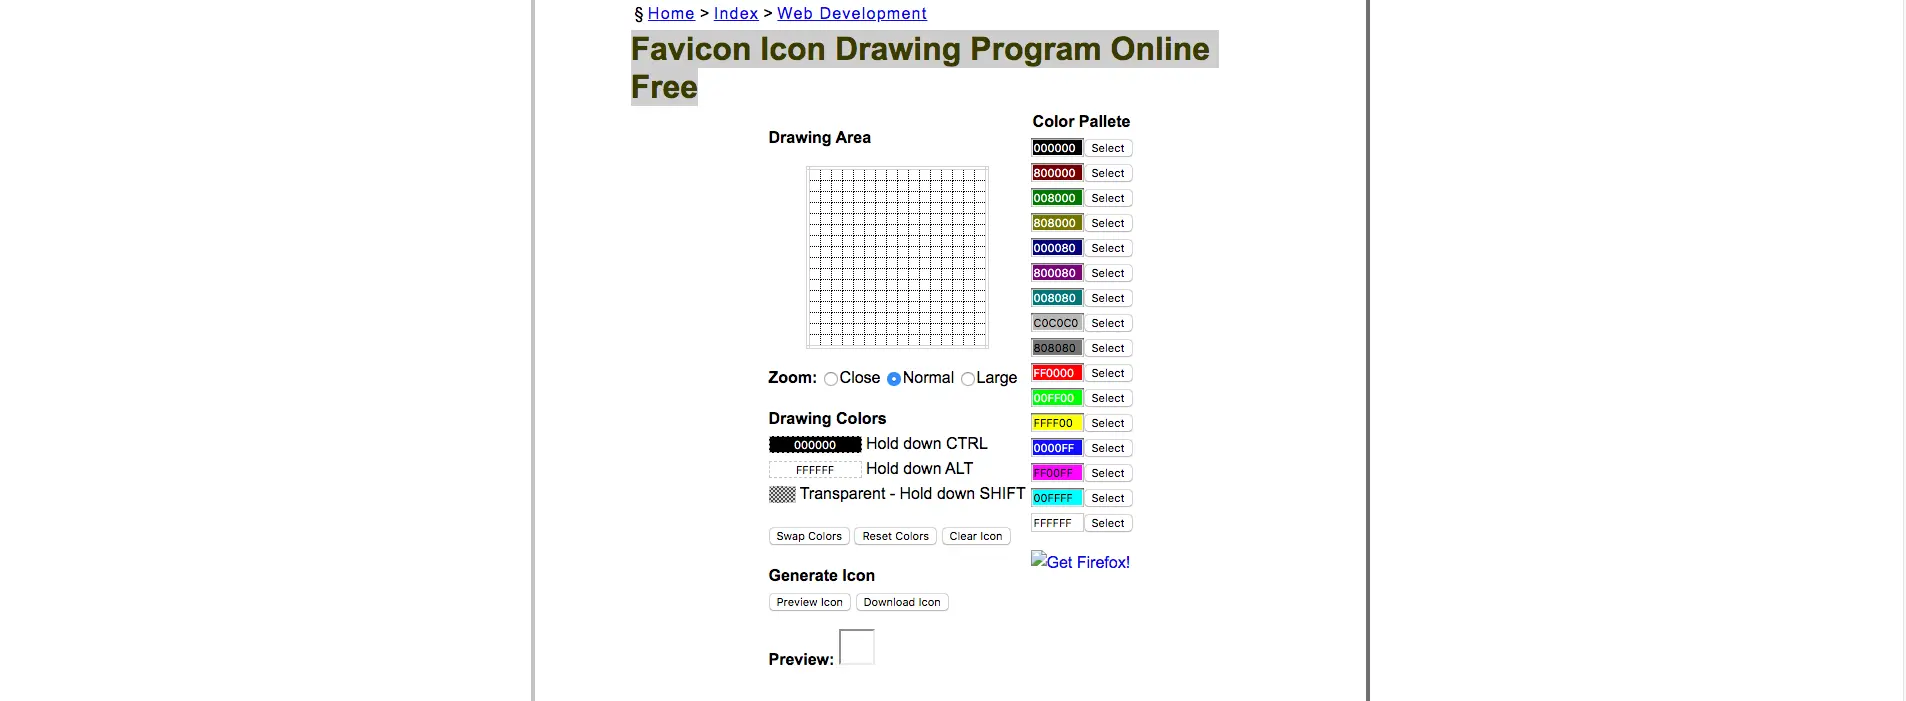 Favicon Icon Drawing Program Online Free